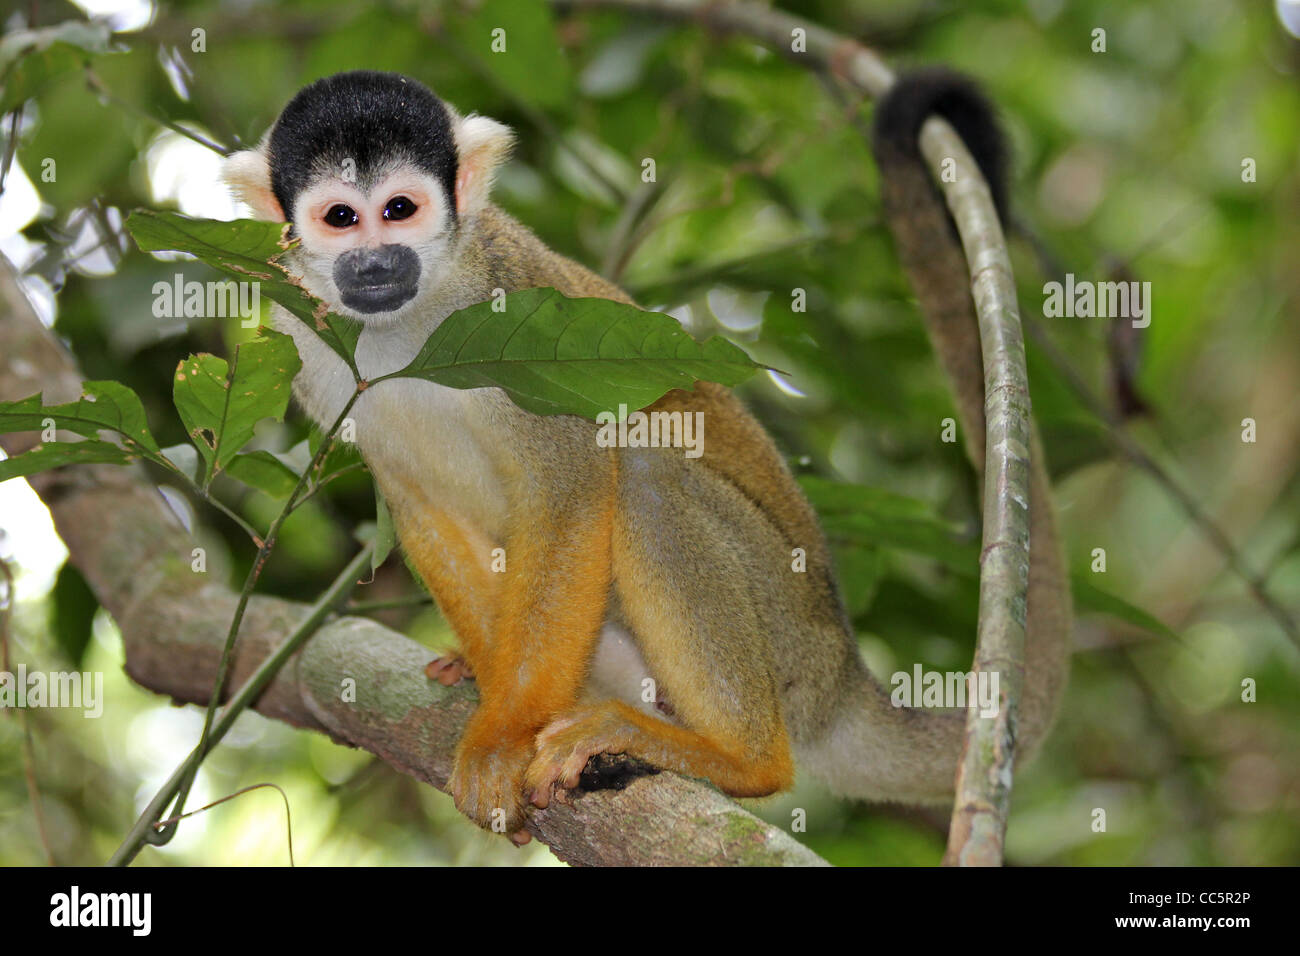 A cute and inquisitive WILD Squirrel Monkey (Saimiri boliviensis) in the Peruvian Amazon Stock Photo